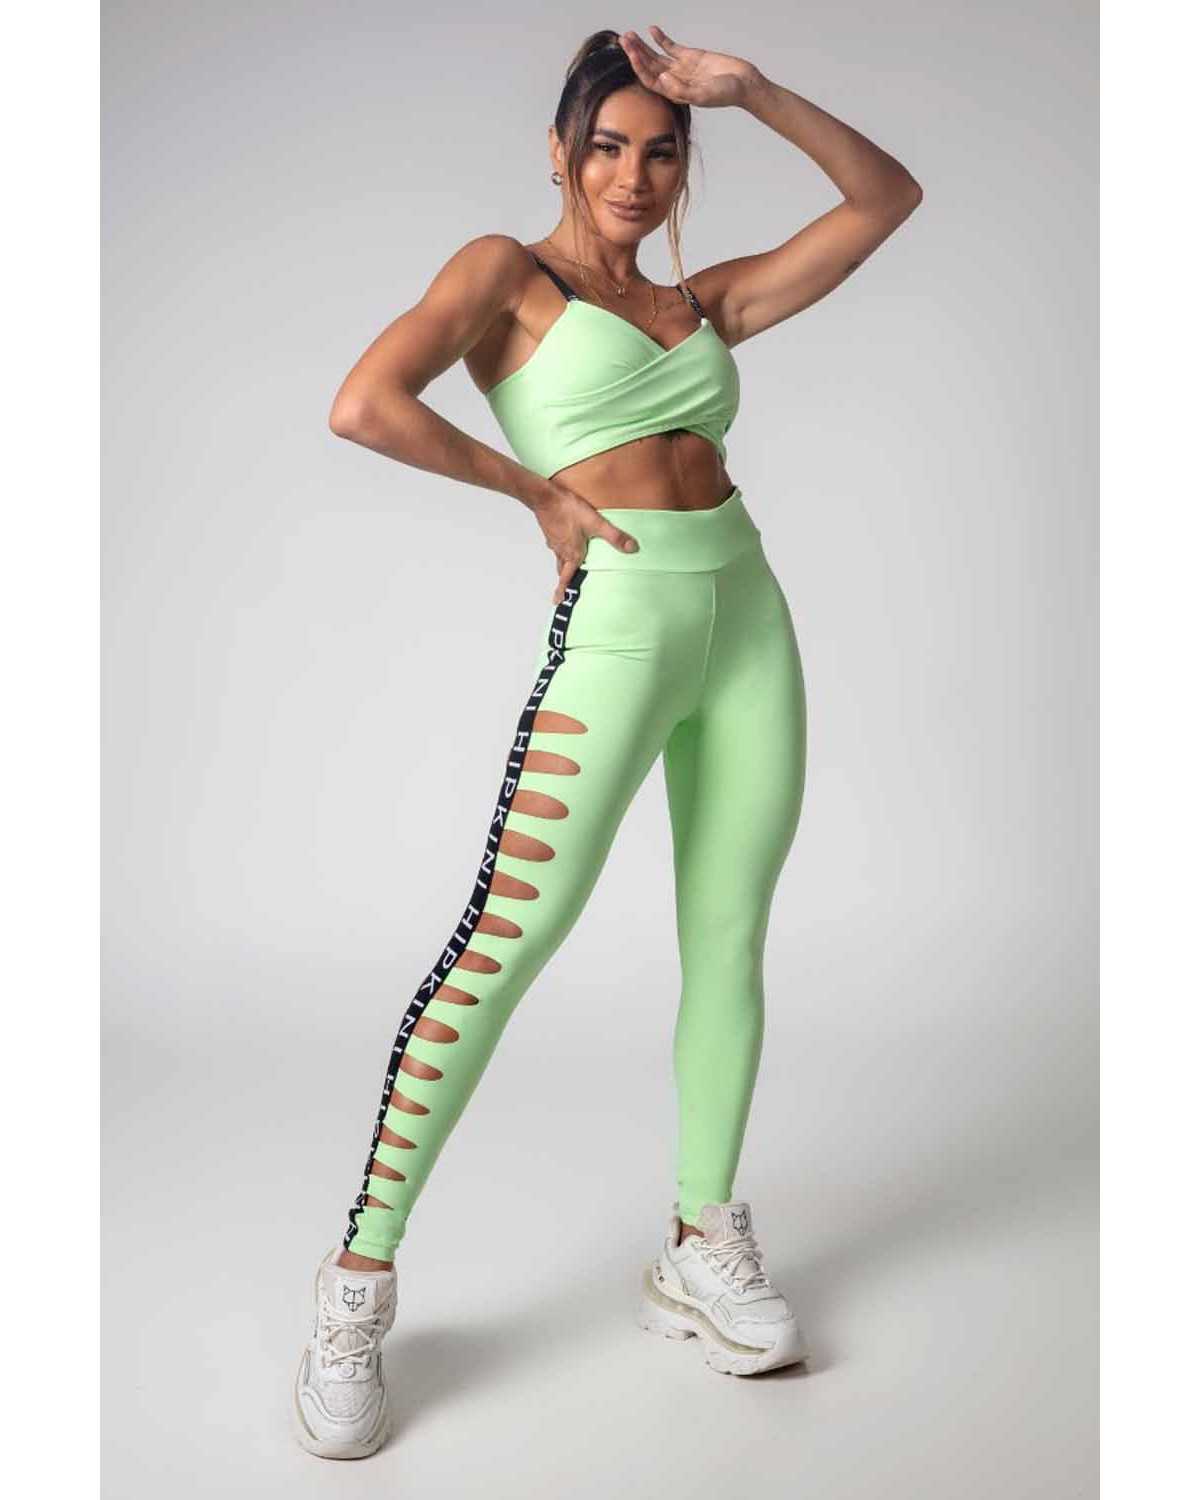 https://www.donnashape.com/126245-large_default/legging-gym-girl-verde-claro-com-laser.jpg